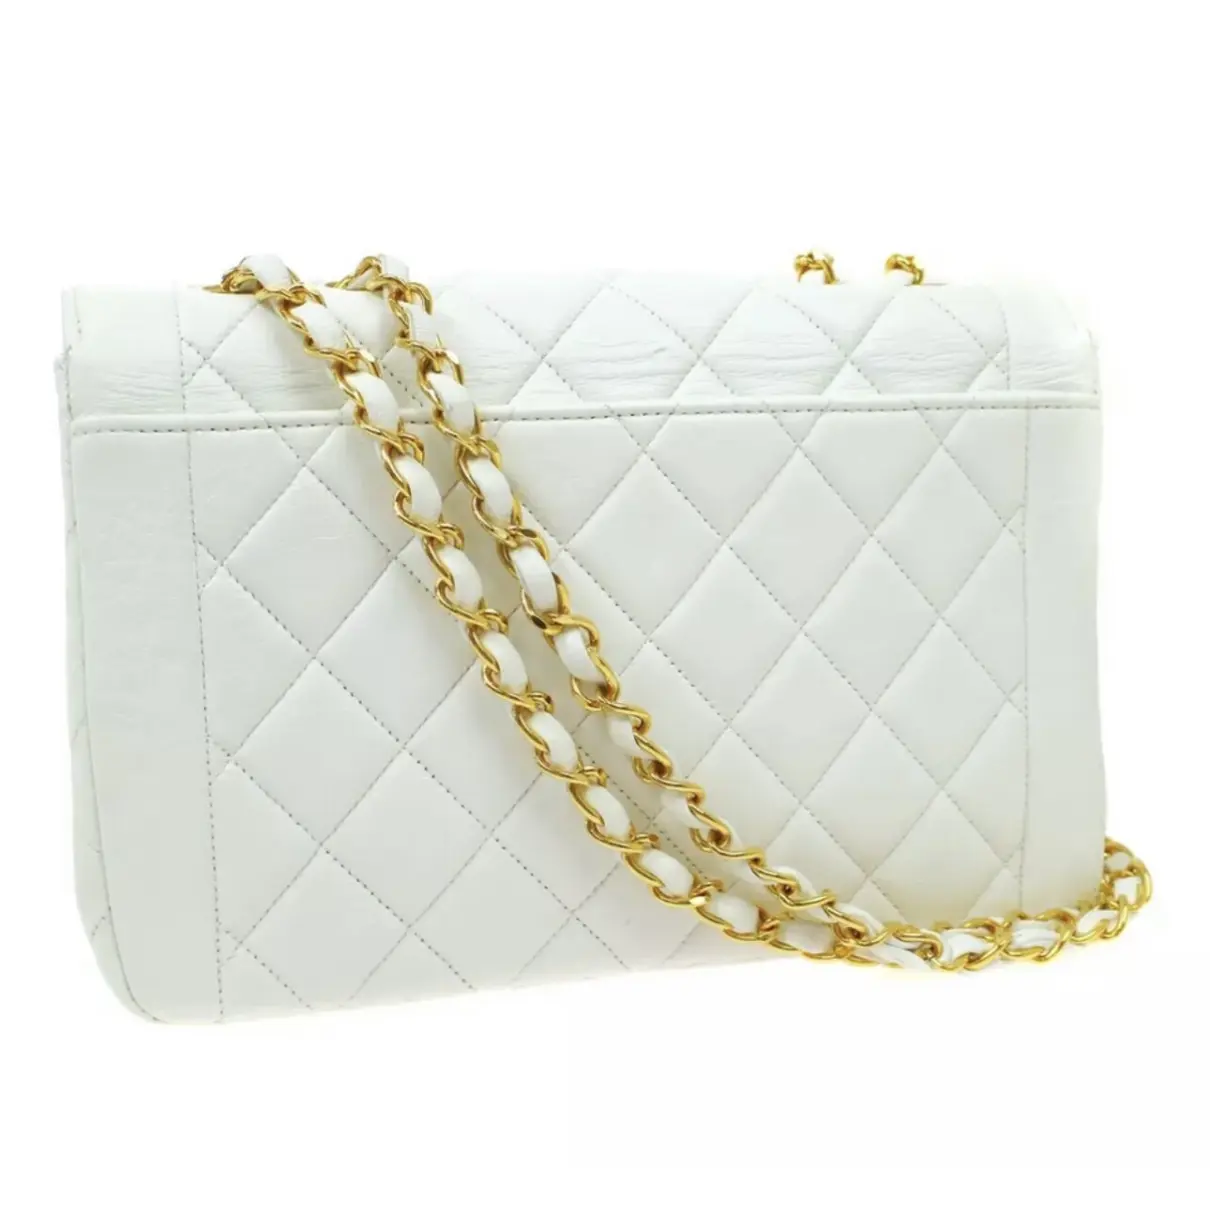 Buy Chanel Diana leather crossbody bag online - Vintage